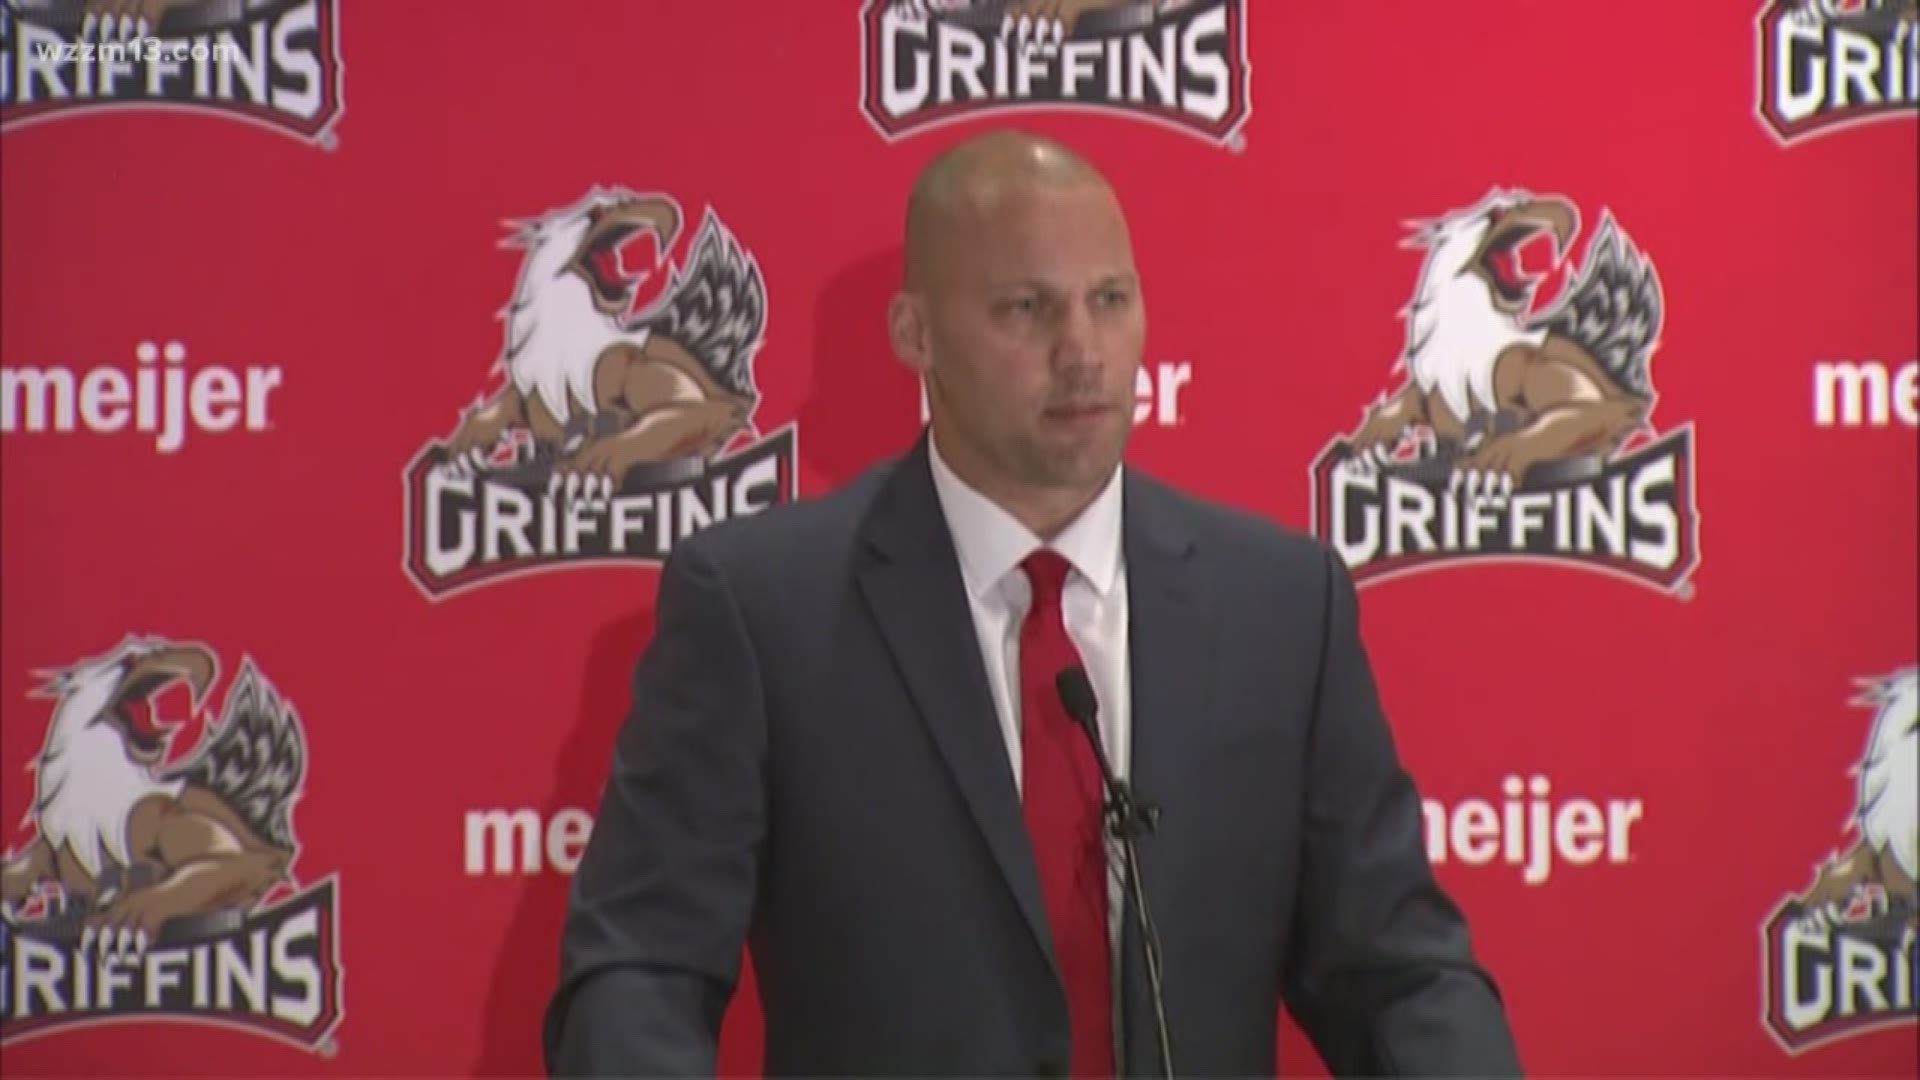 Griffin's announce new head coach